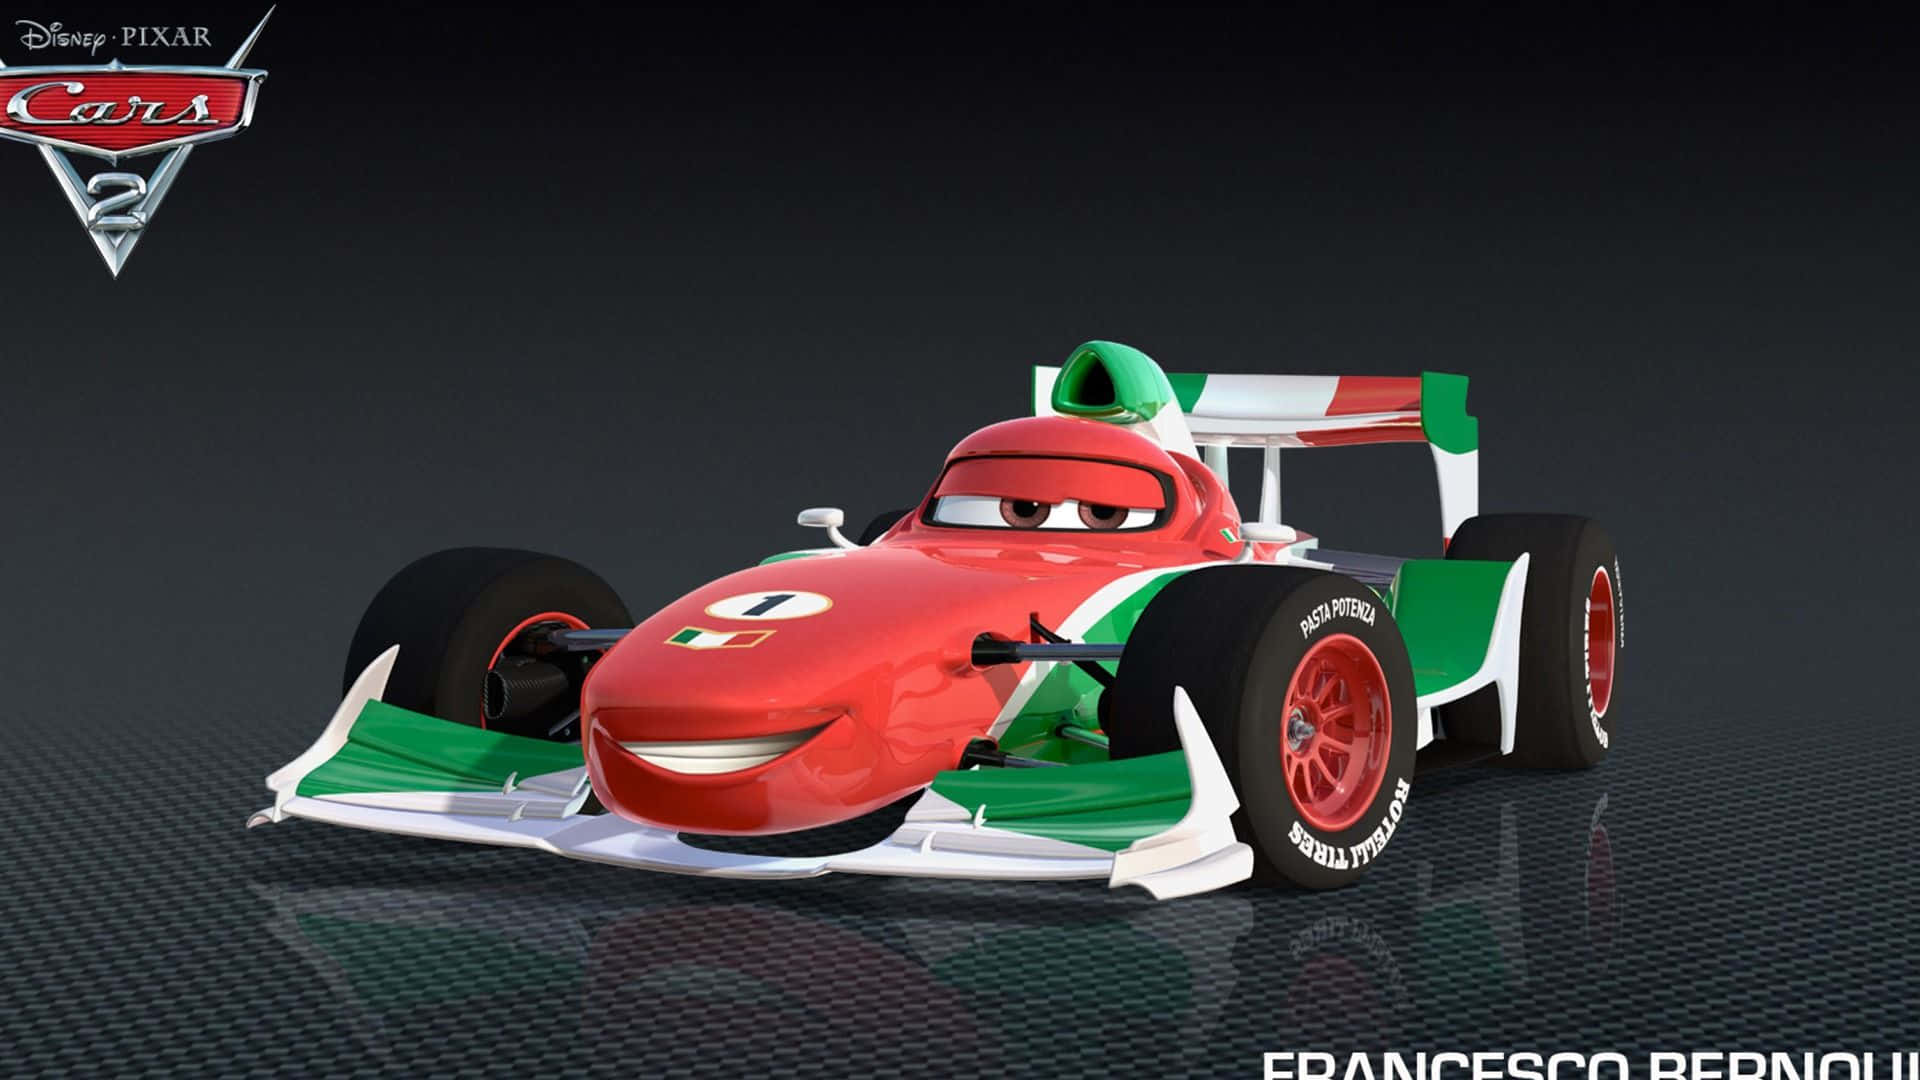 Disneycars - Francisco Ferrari